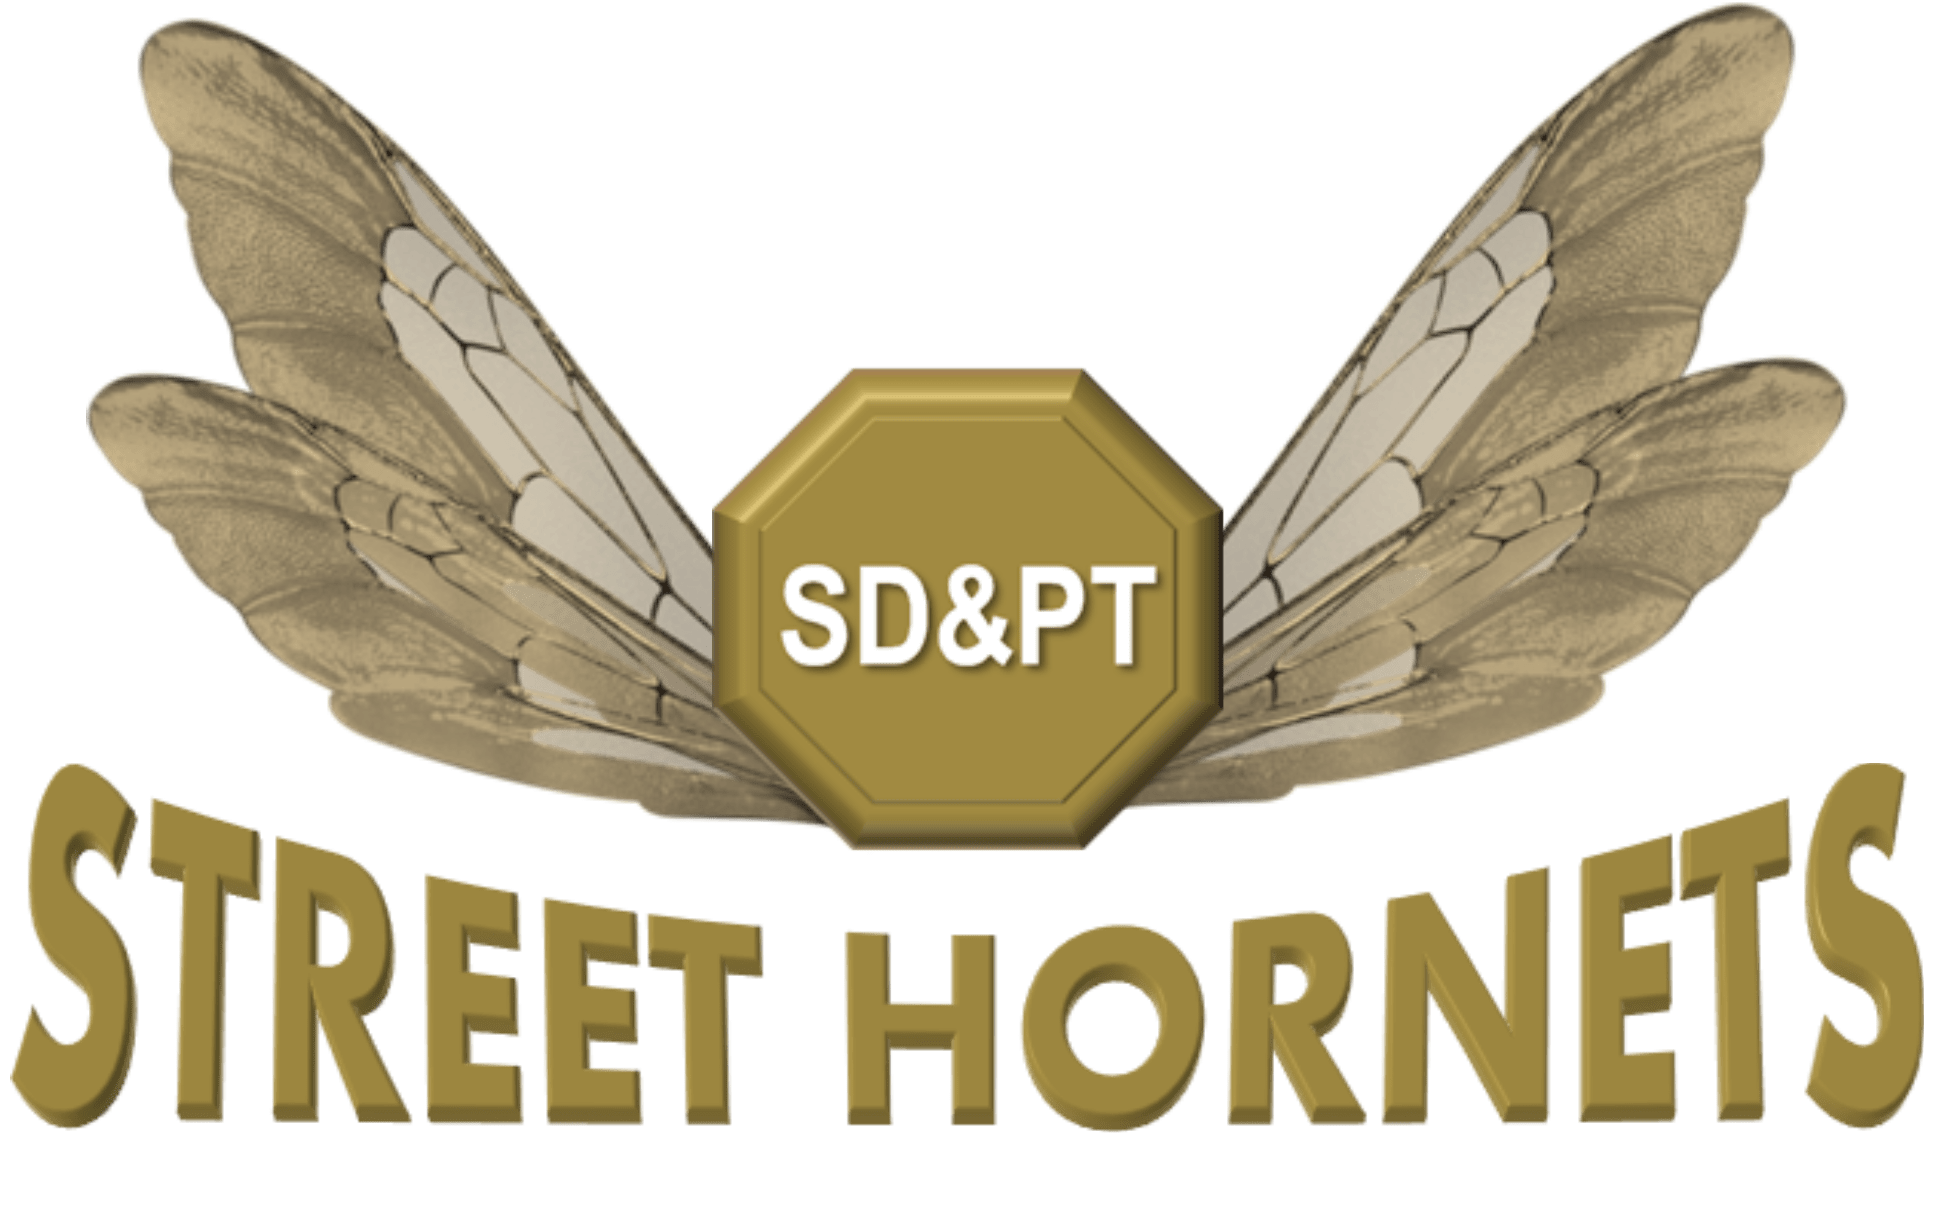 Street Hornets wings